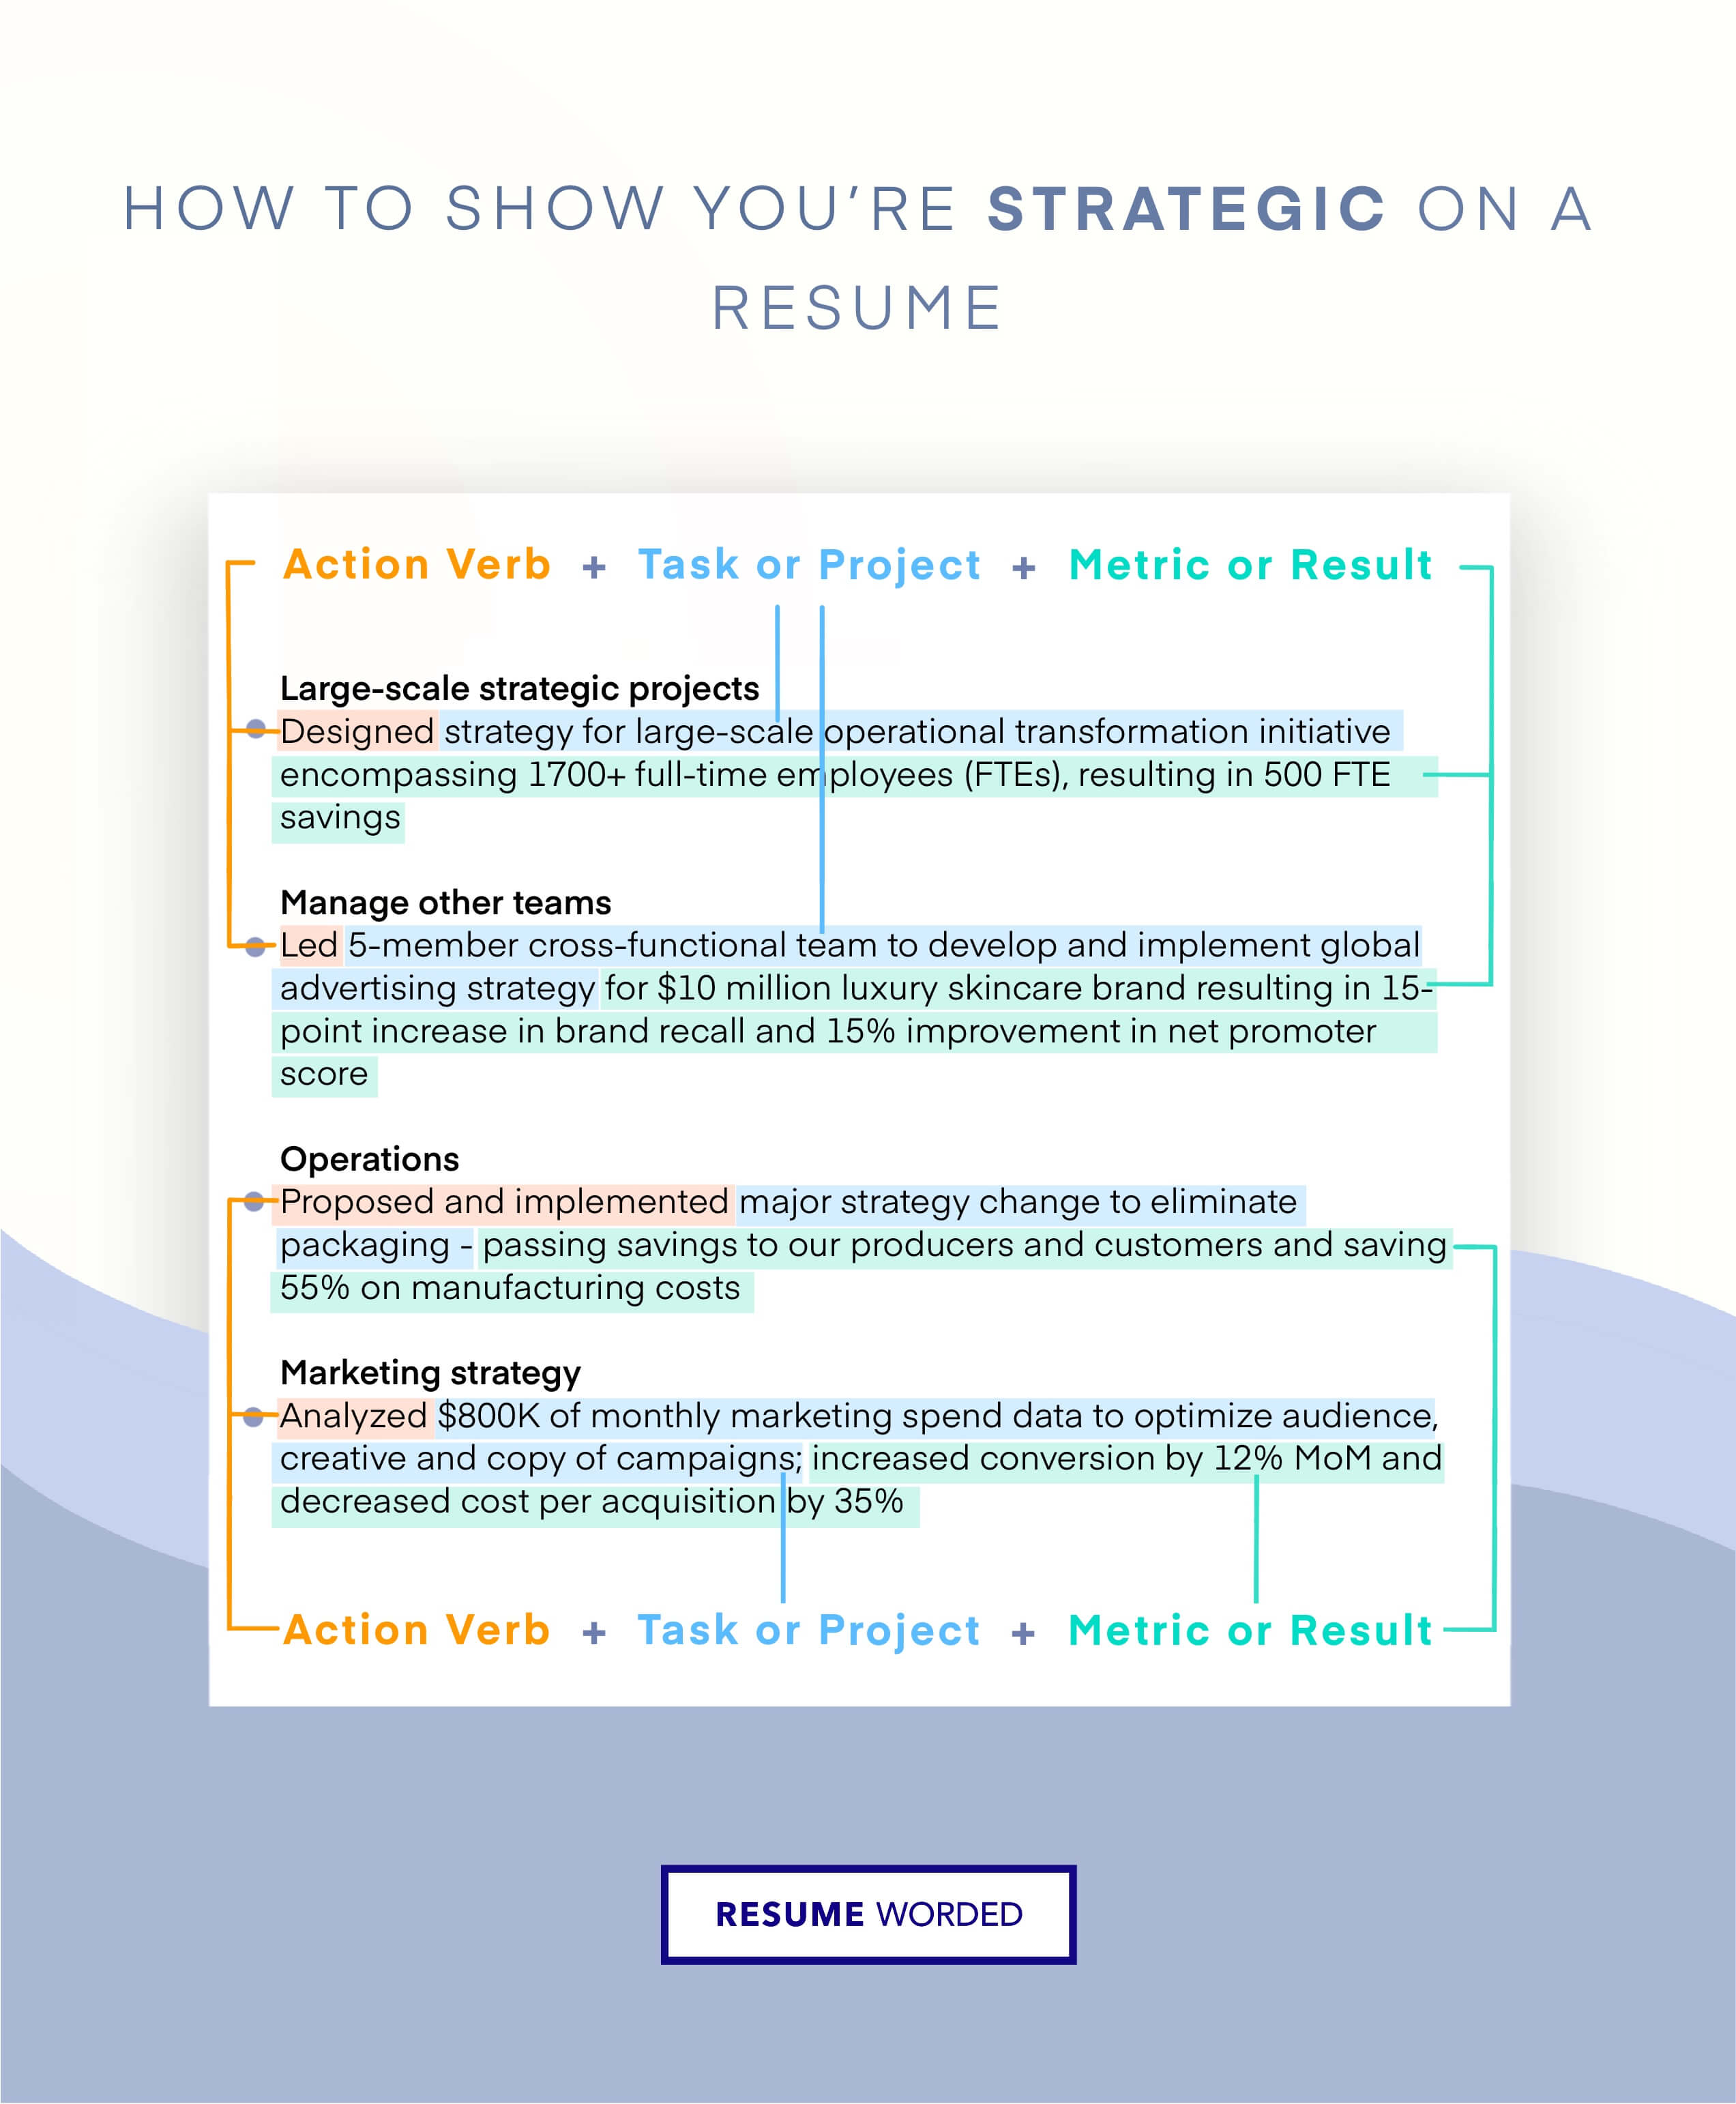 Showcase your strategic thinking skills - Director of Business Development CV